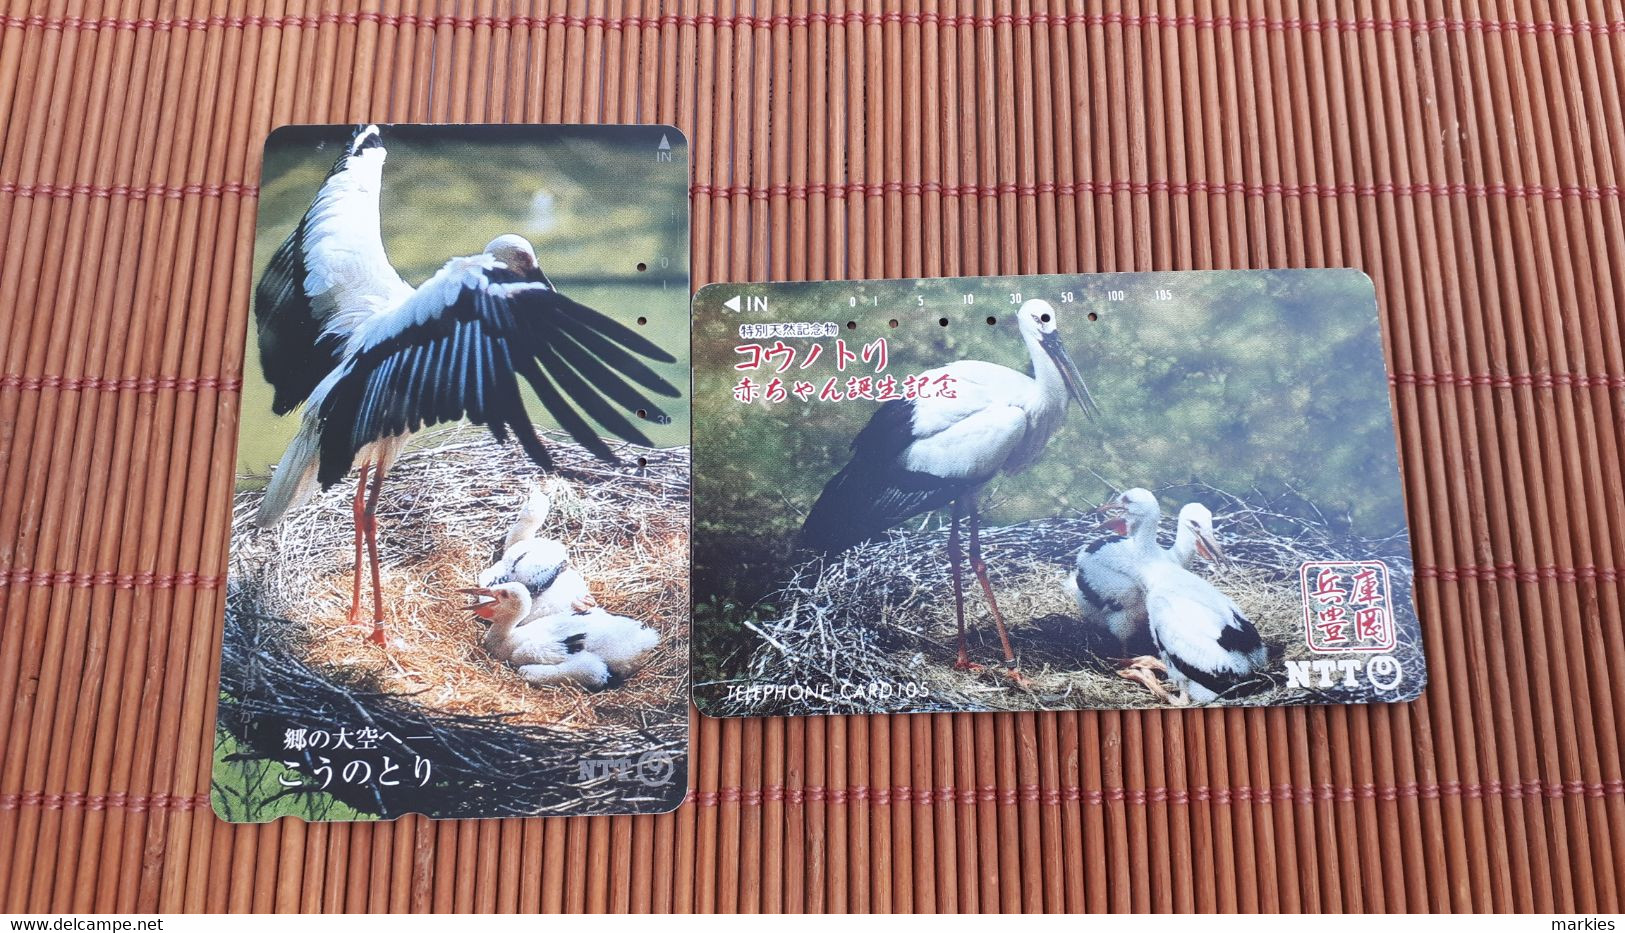 2 Storks Bird Phonecard  Used Rare - Aquile & Rapaci Diurni